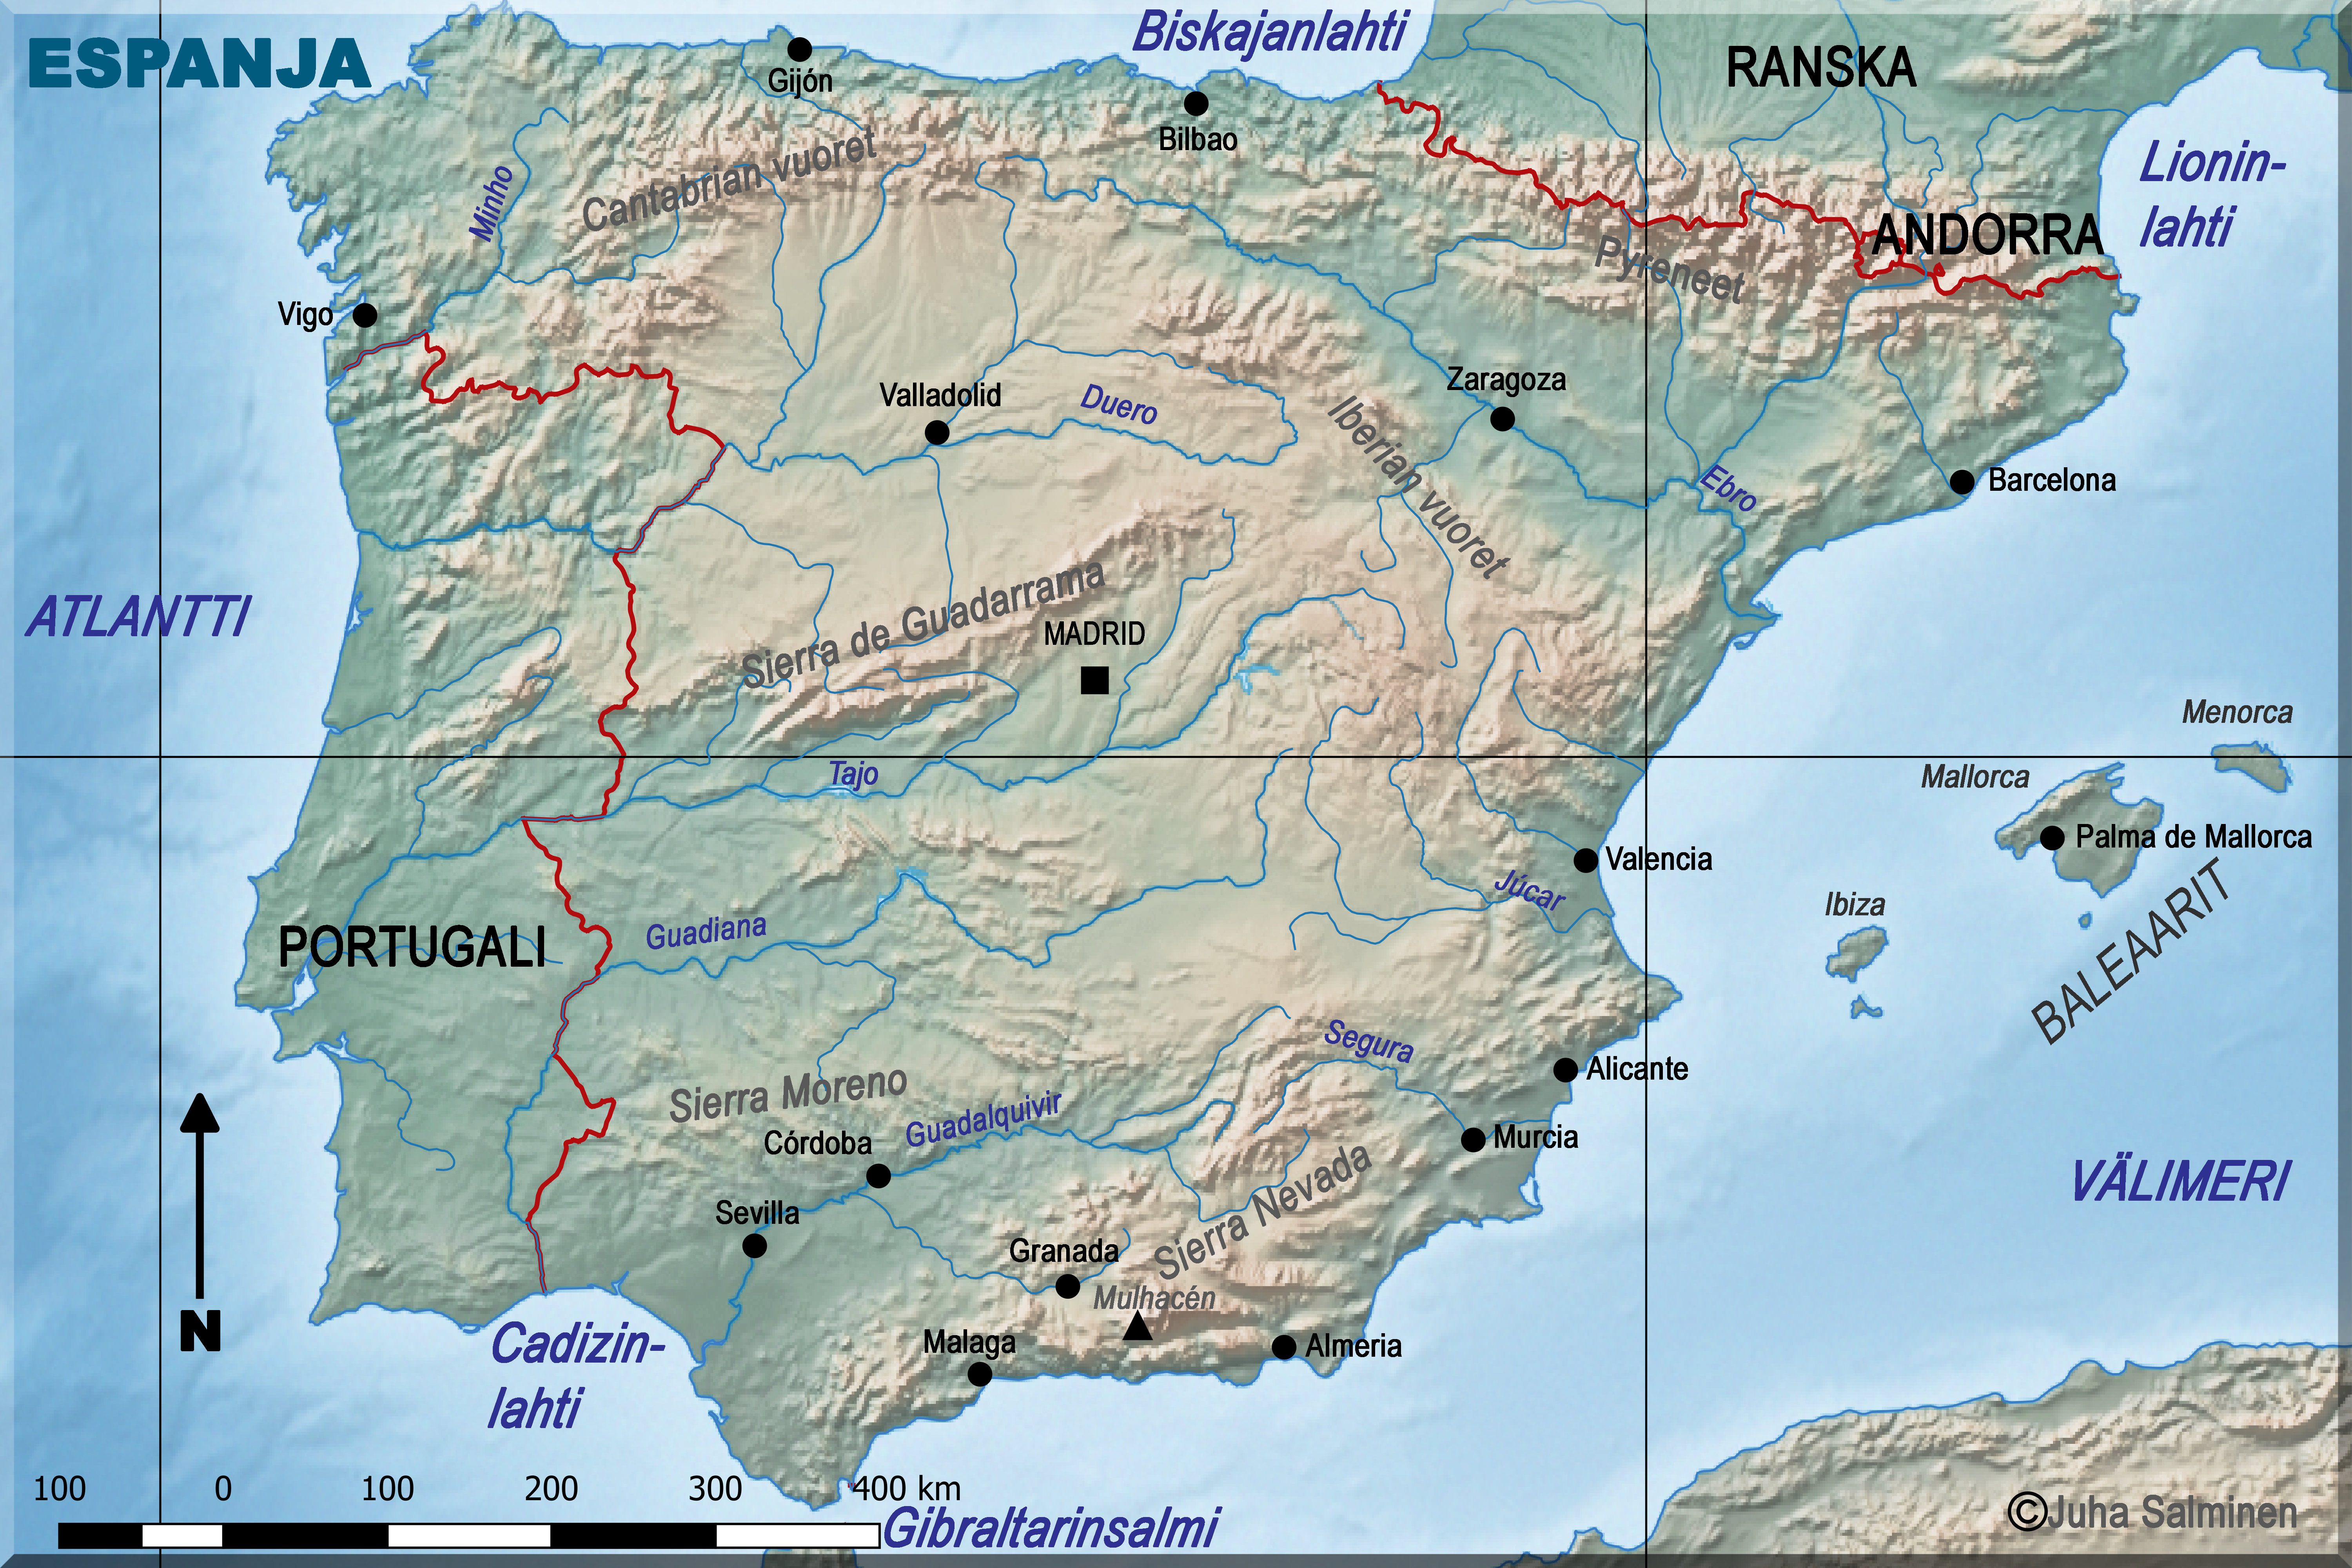 espanjan kartta Espanjan kartta